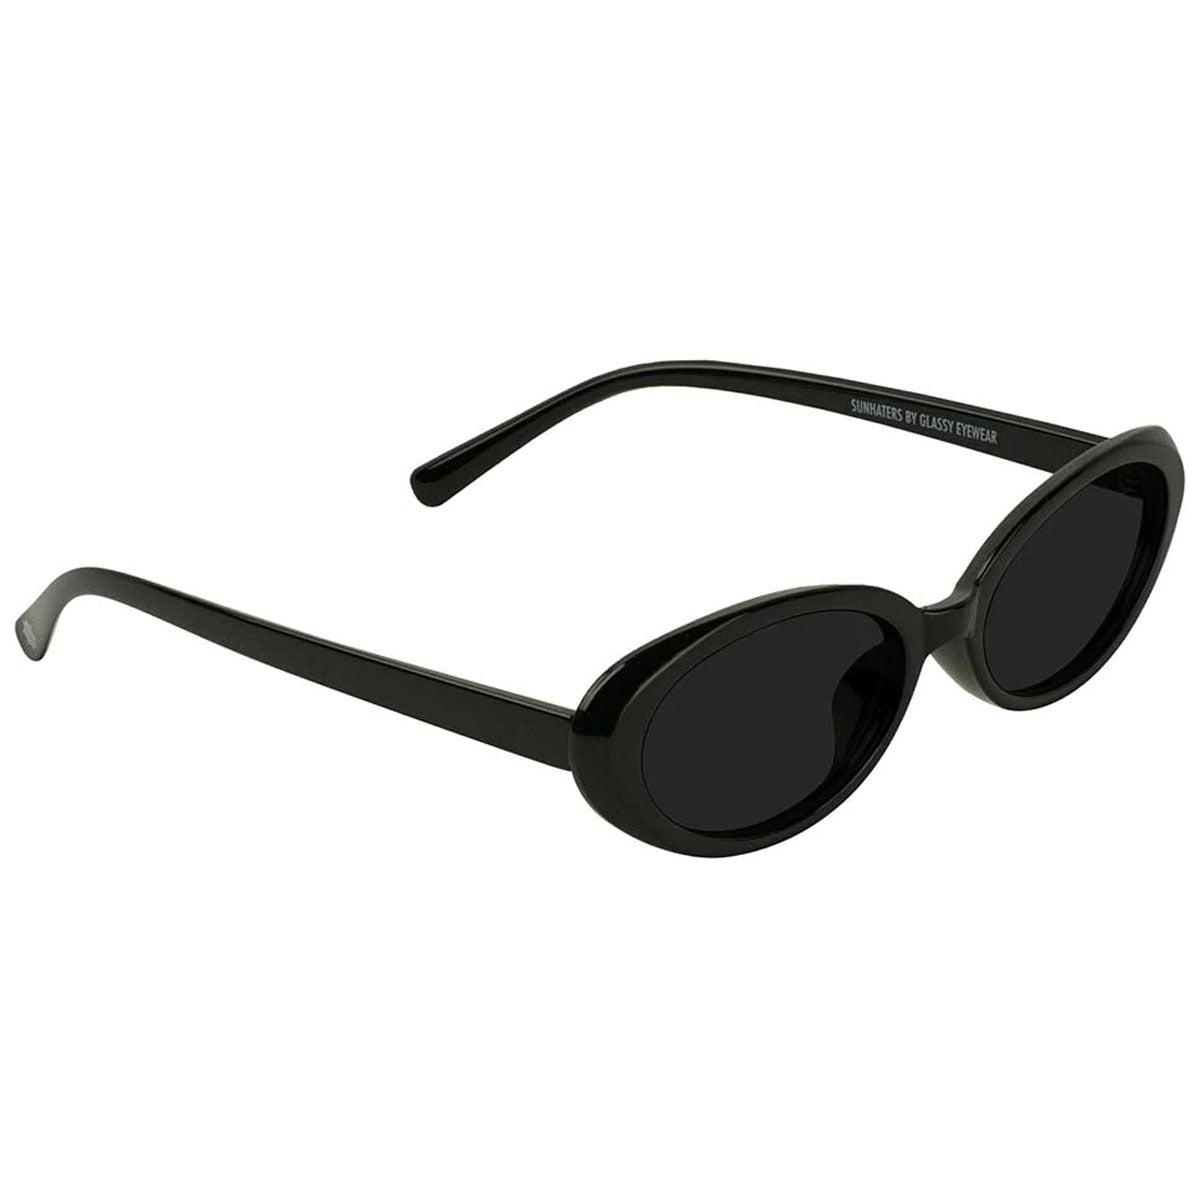 Glassy Stanton Sunglasses - Black image 1